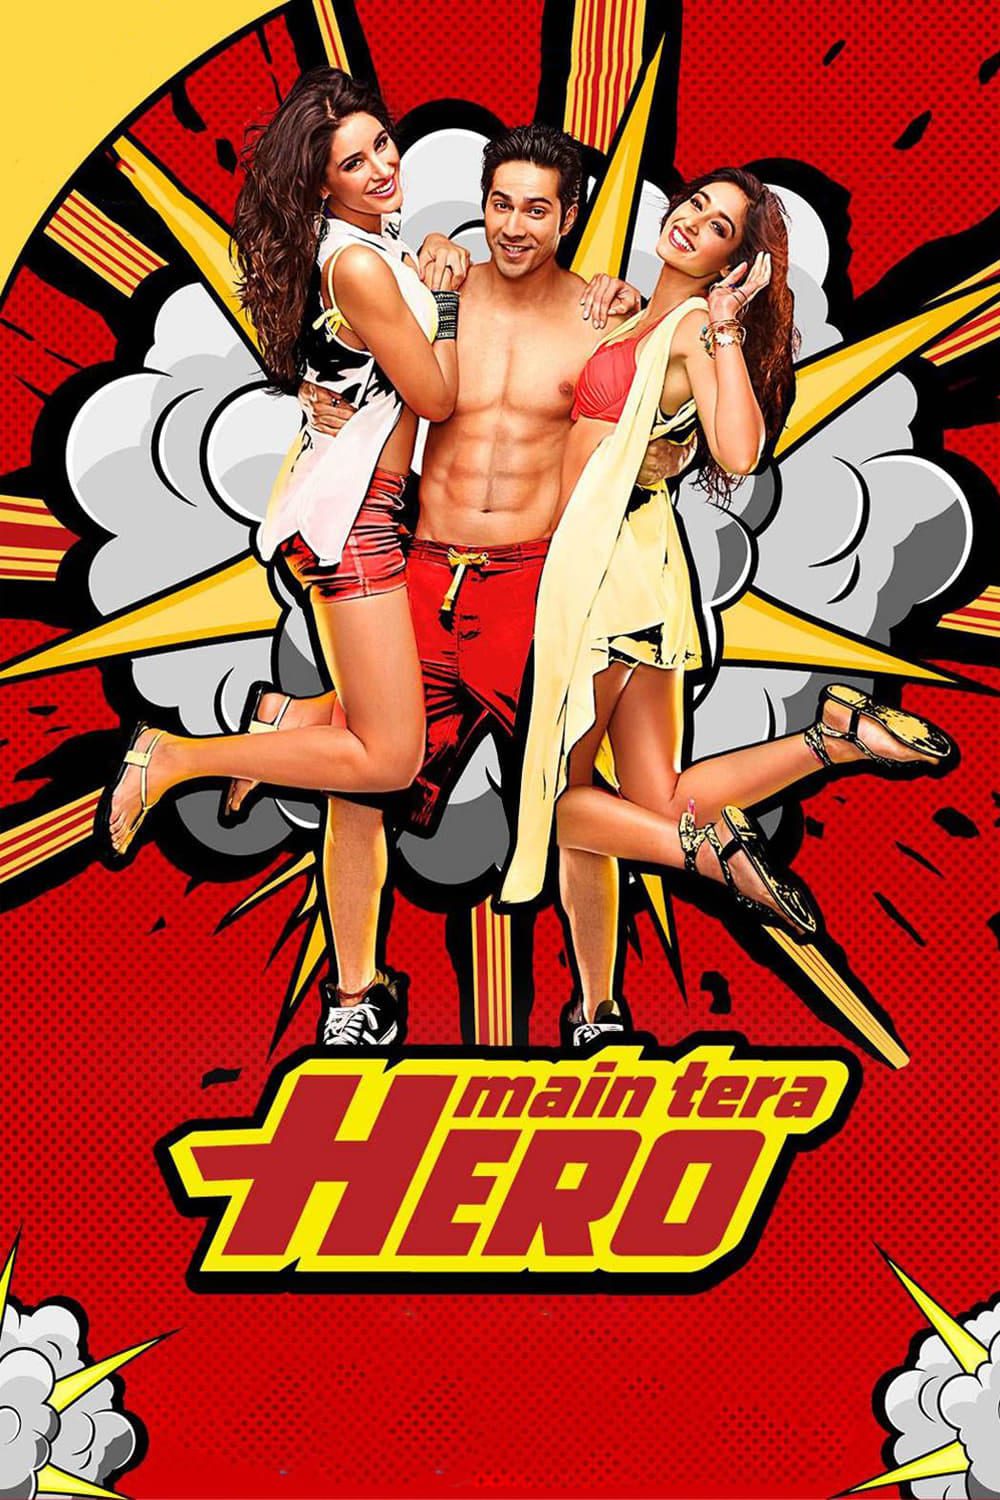 Poster for the movie "Main Tera Hero"